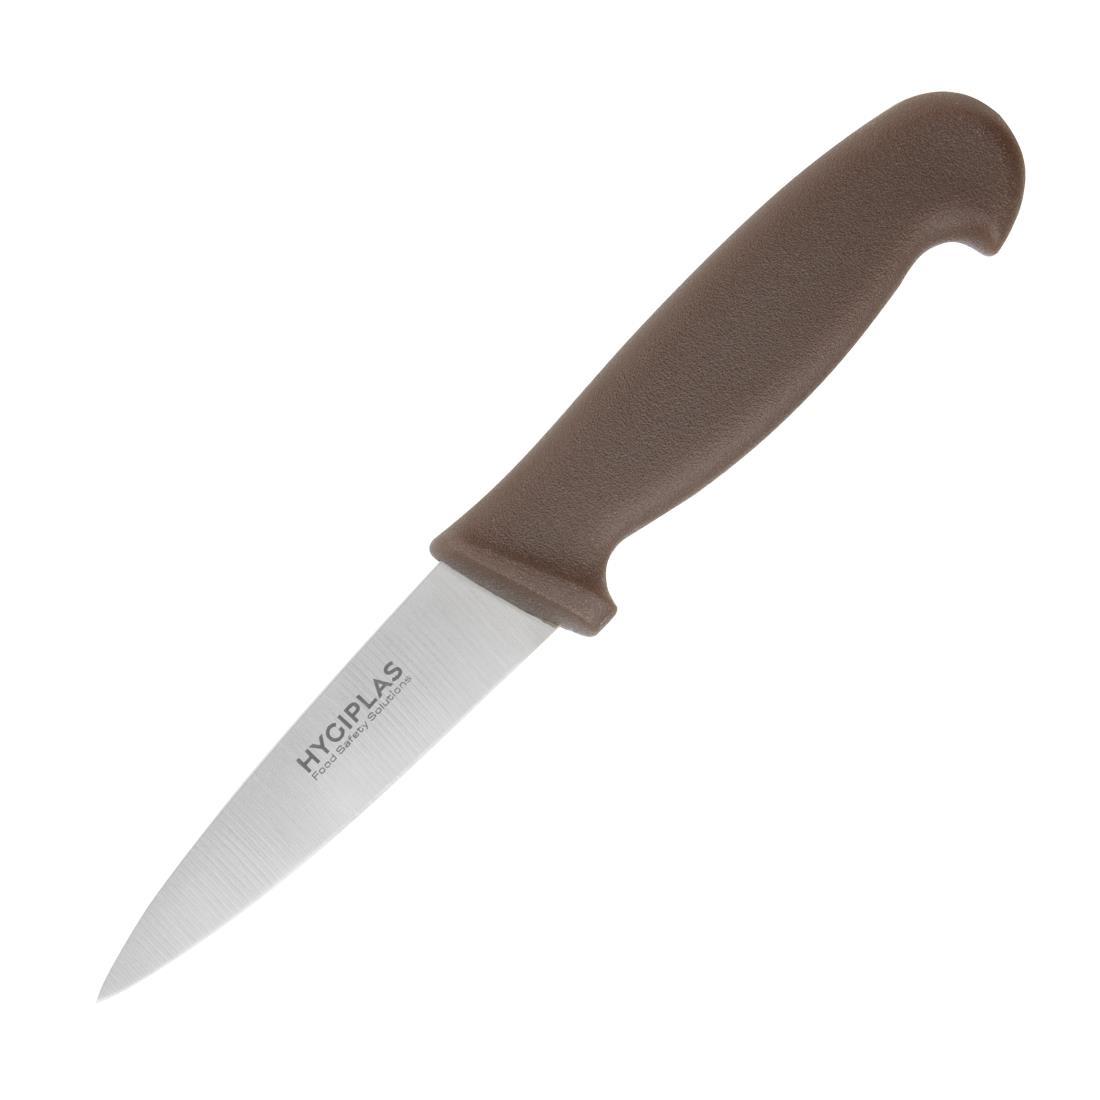 Hygiplas Paring Knife Brown 9cm - C840  - 1